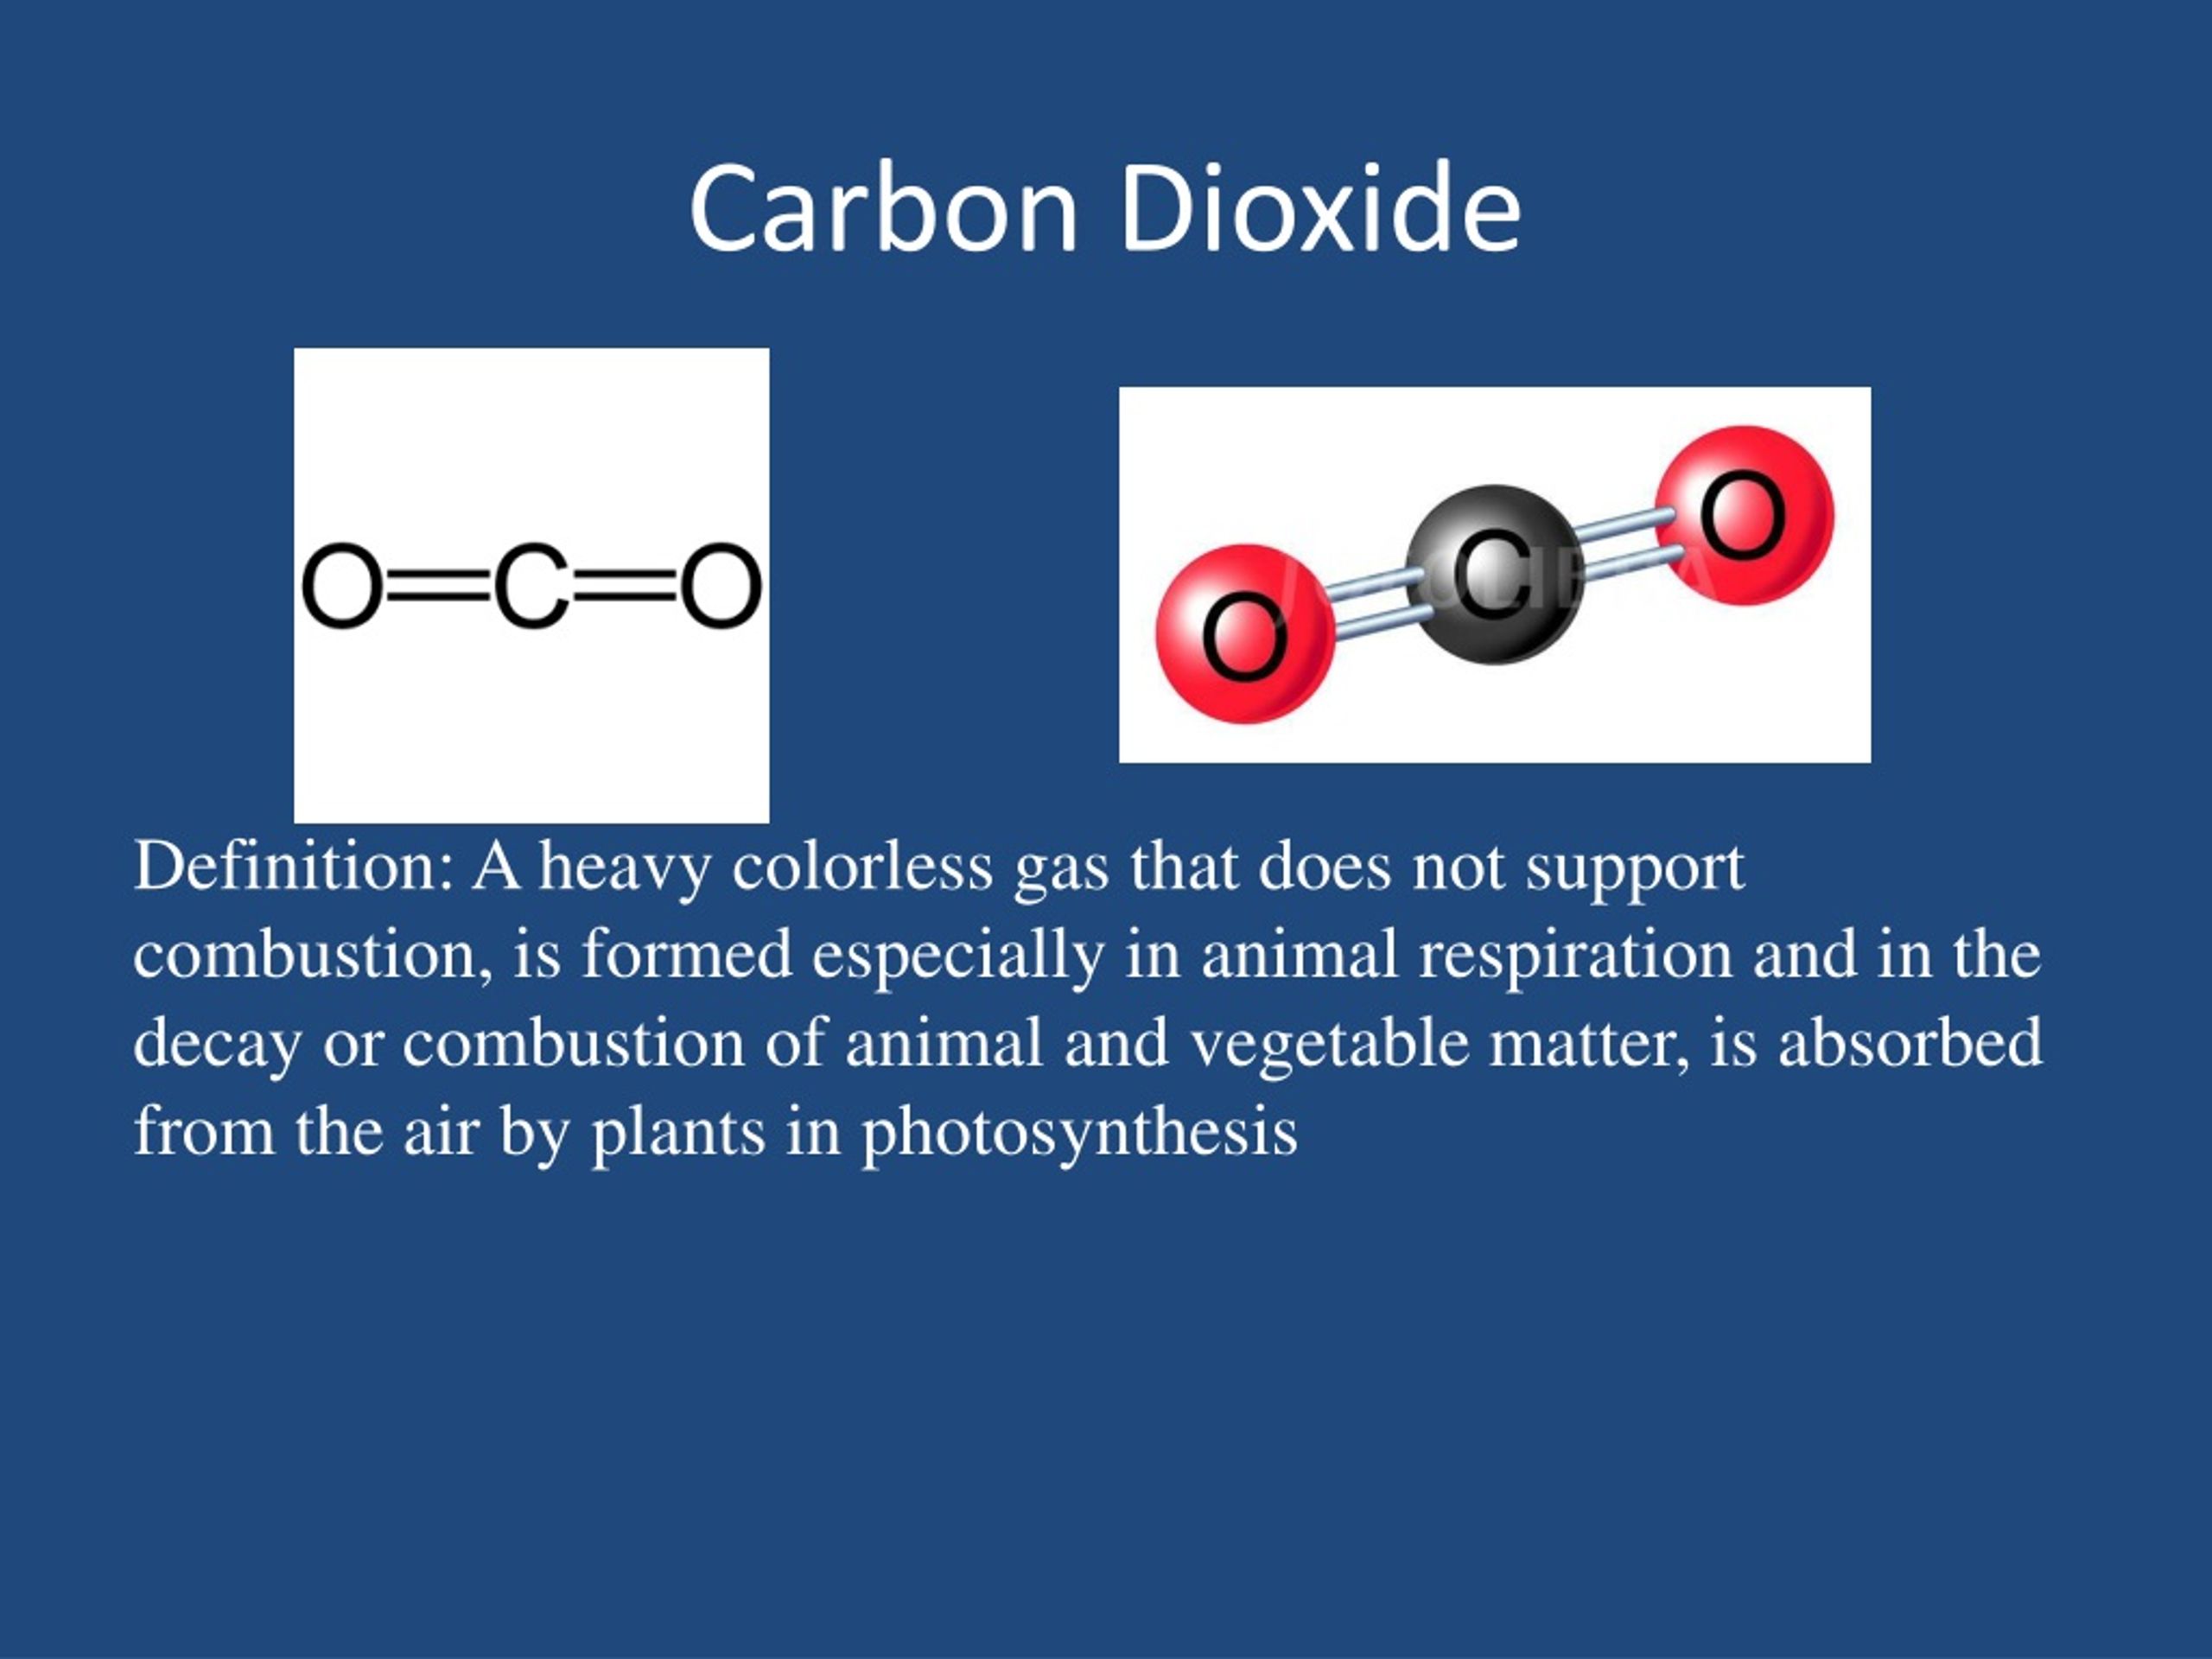 Use carbon dioxide. Диоксид карбона. Диоксид углерода как выглядит. Carbon dioxide polarity. ##Carbon dioxide emisson.